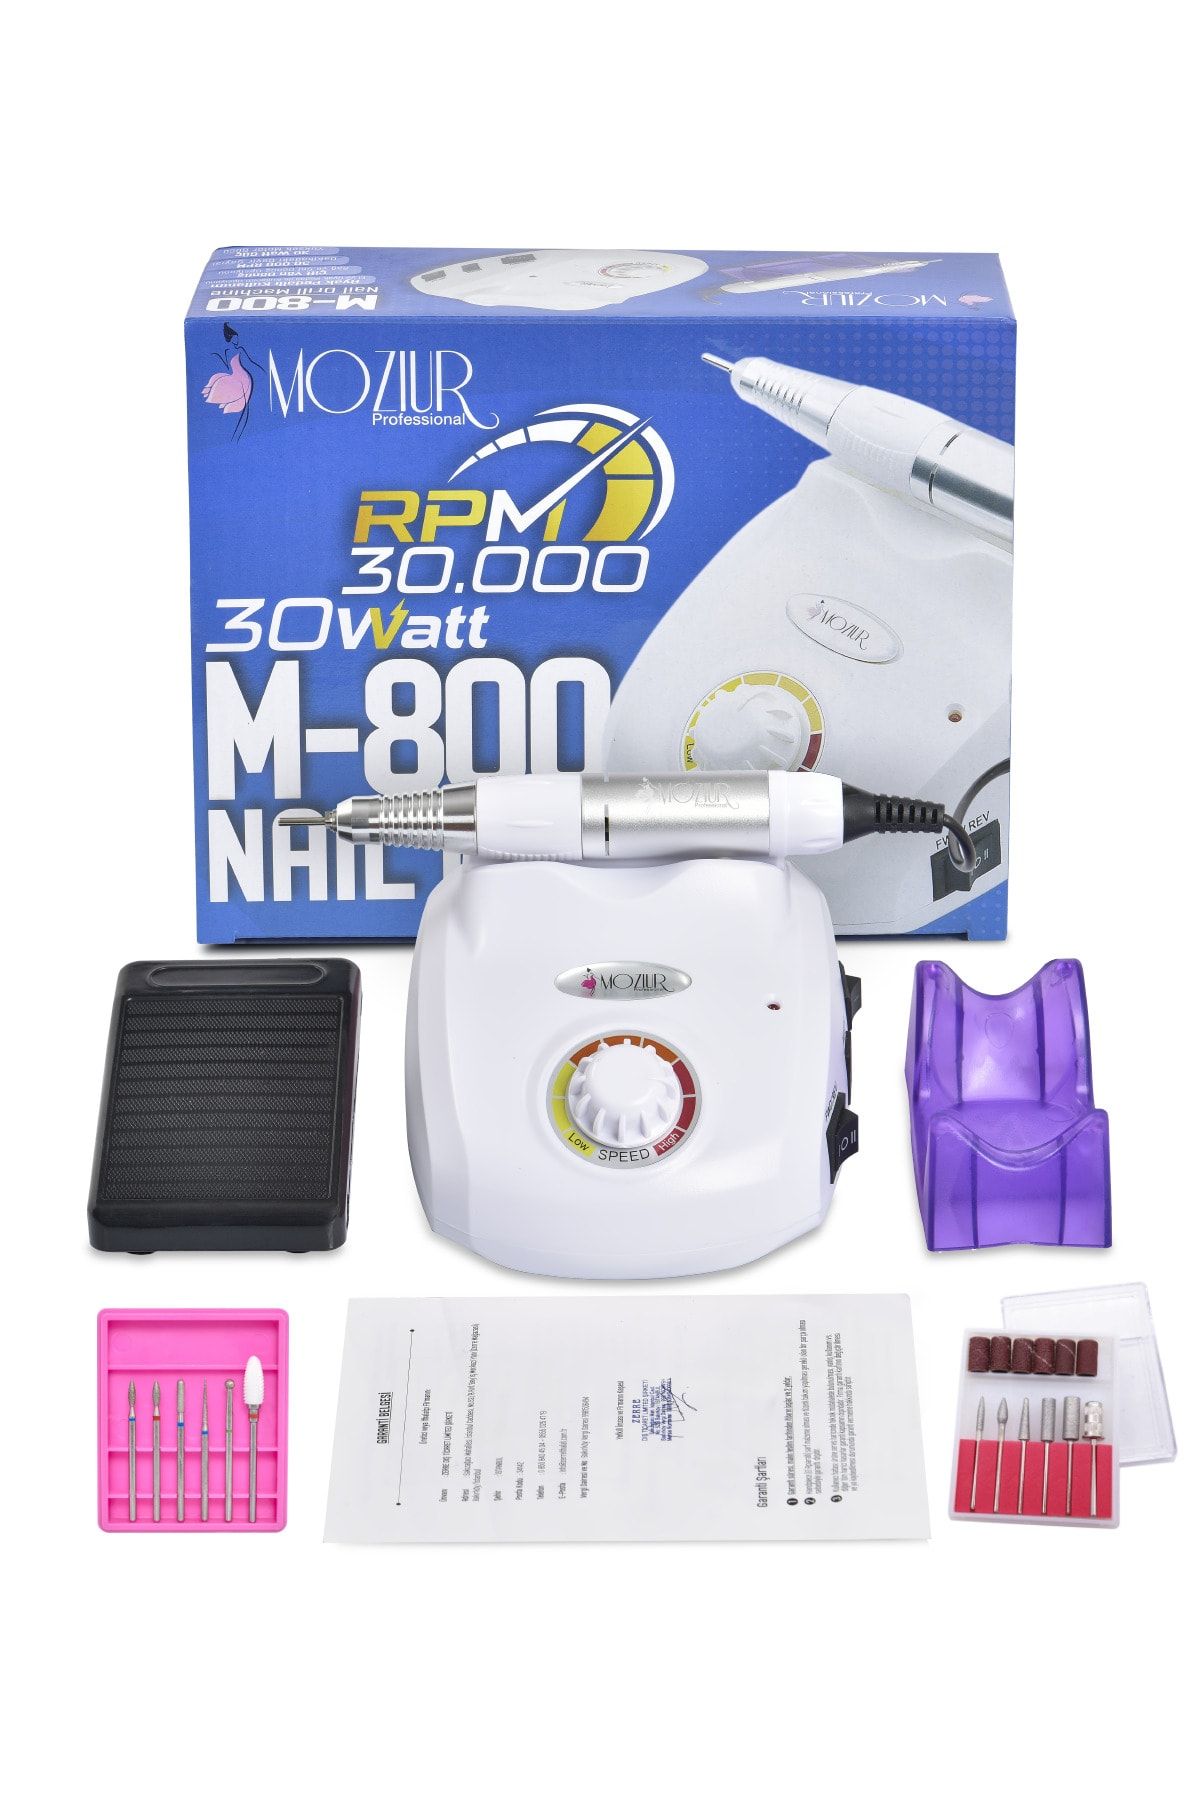 MOZIUR M-800 Elektrikli Tırnak Törpüsü Makinesi 30w 30.000 Rpm - Beyaz